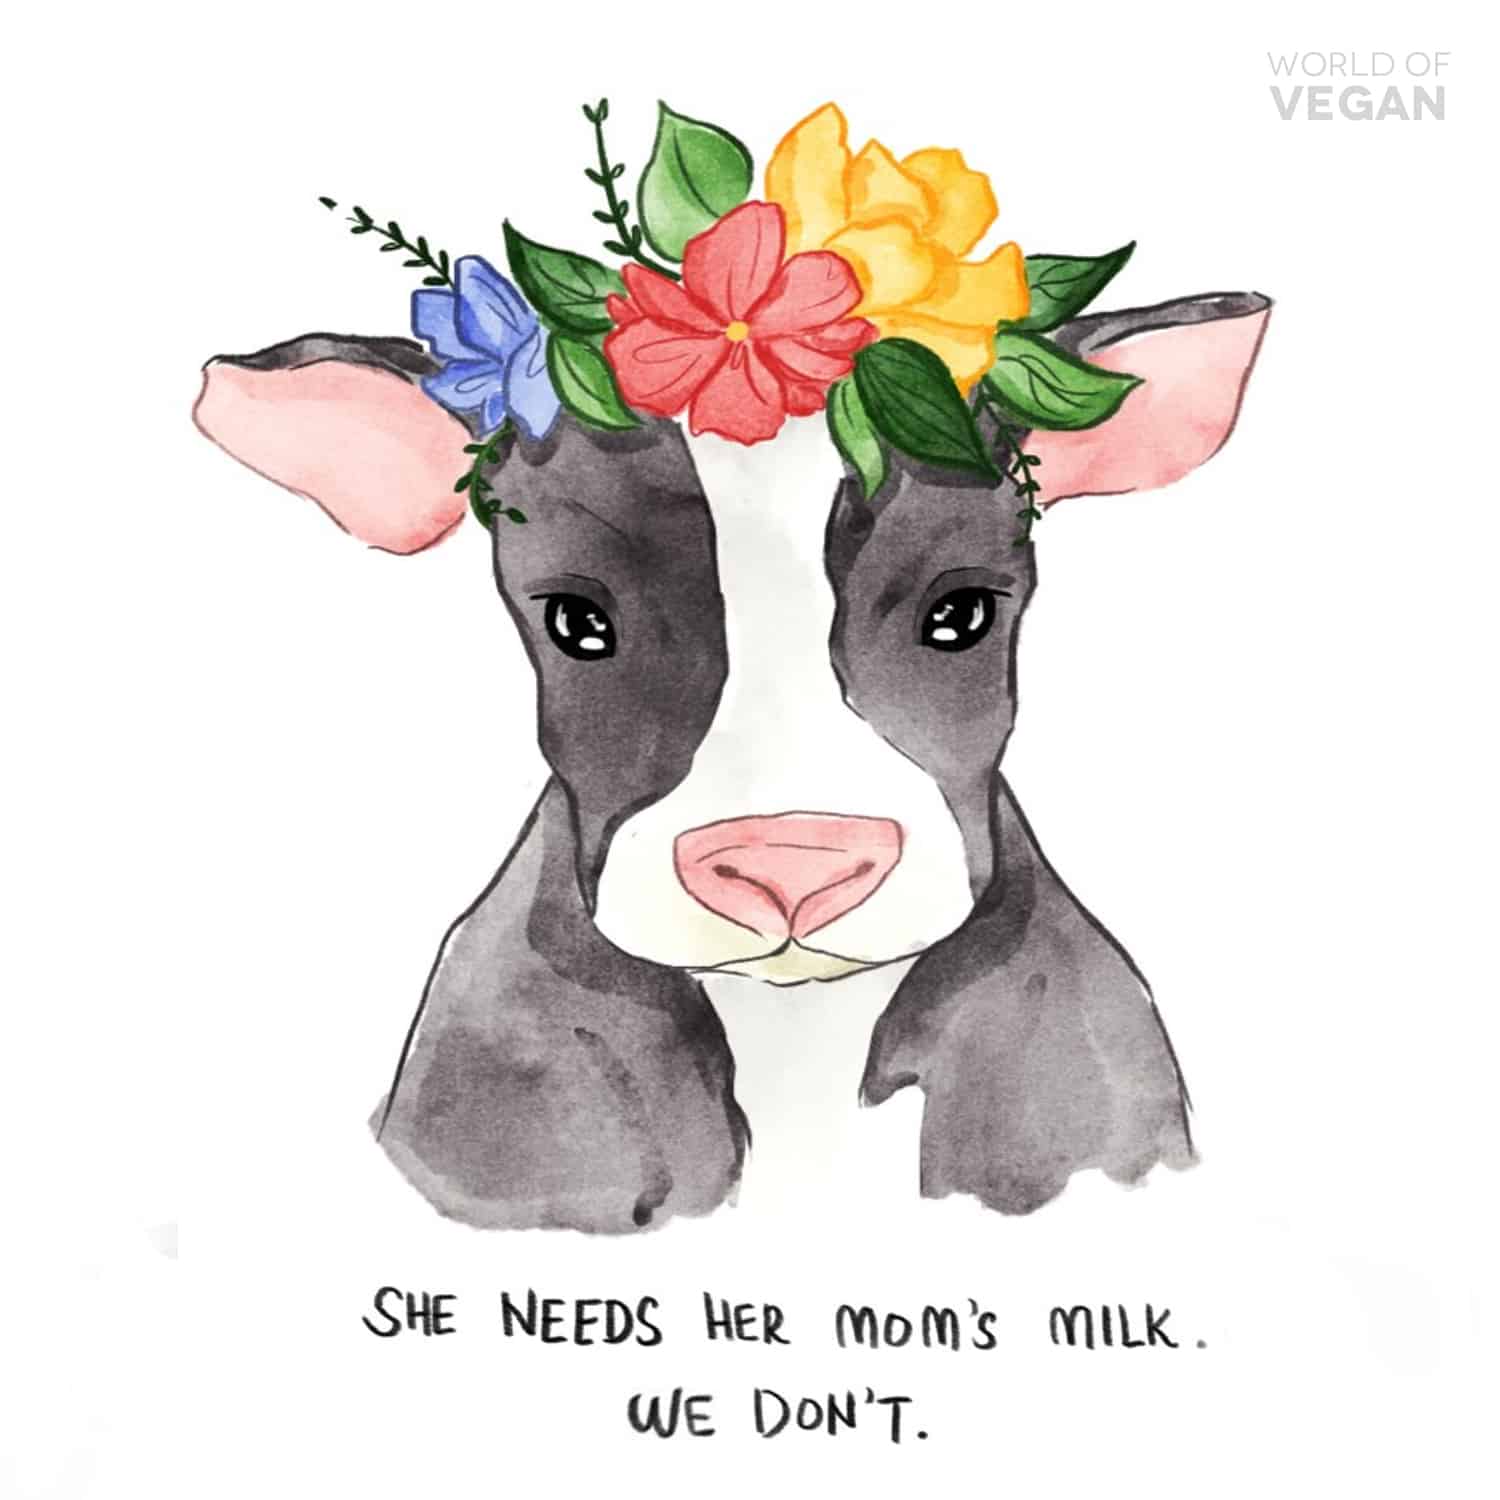 Cow Flower Crown Illustration | World of Vegan Vegan Art | WorldofVegan.com #art #cow #animals #vegan